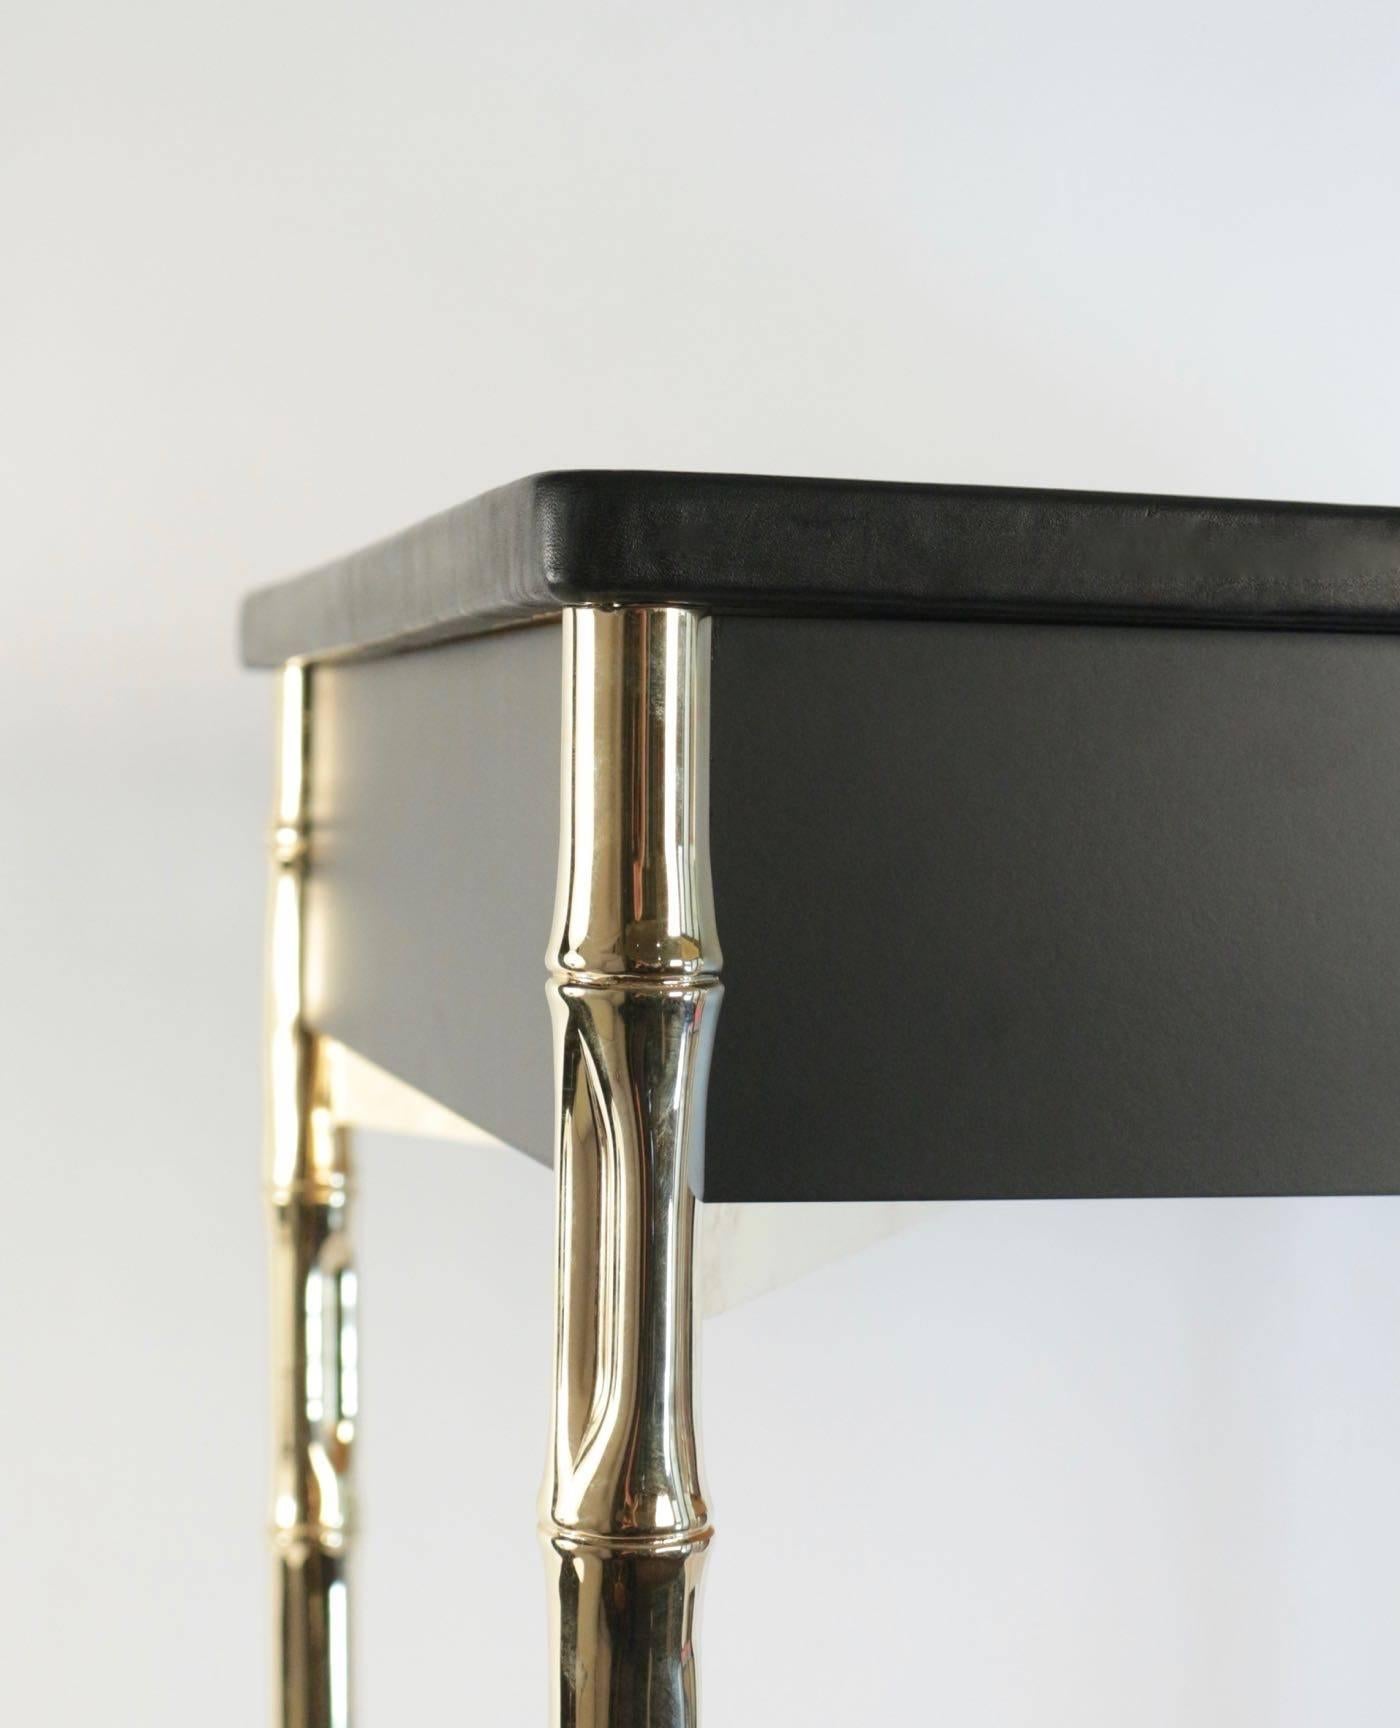 Brass Maison Jansen desk from the 60s with brass handles Guy Lefèvre.